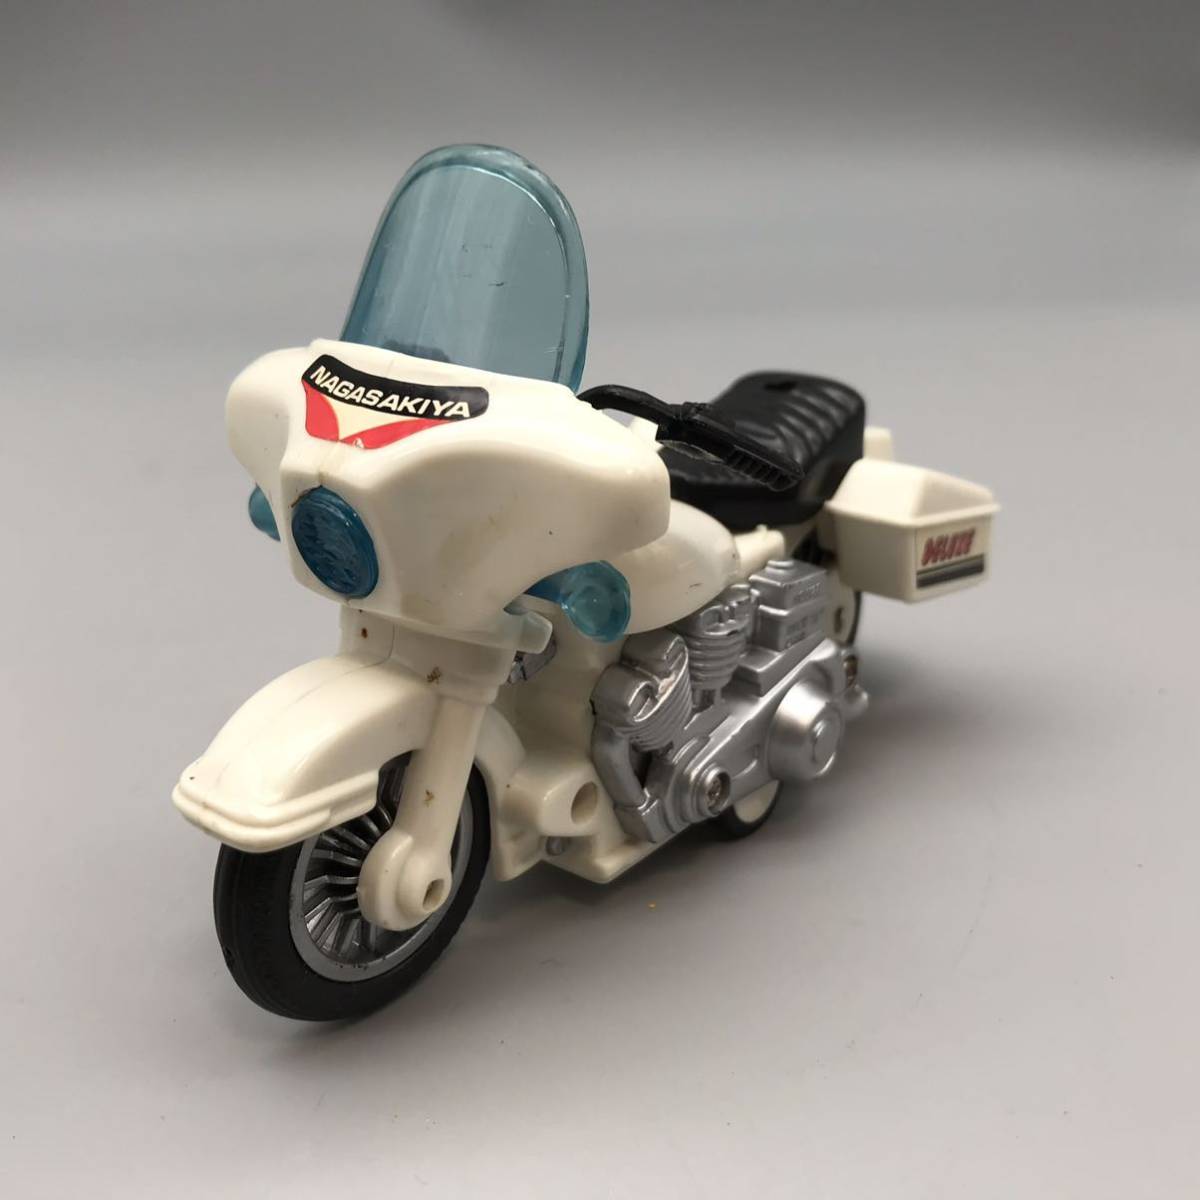 NAGASAKIYA ナガサキヤ DELUXE オートバイ 白バイ No.9122 cvcrbriahi フィギュア ミニカー バイク おもちゃ 玩具 おすすめ_画像1